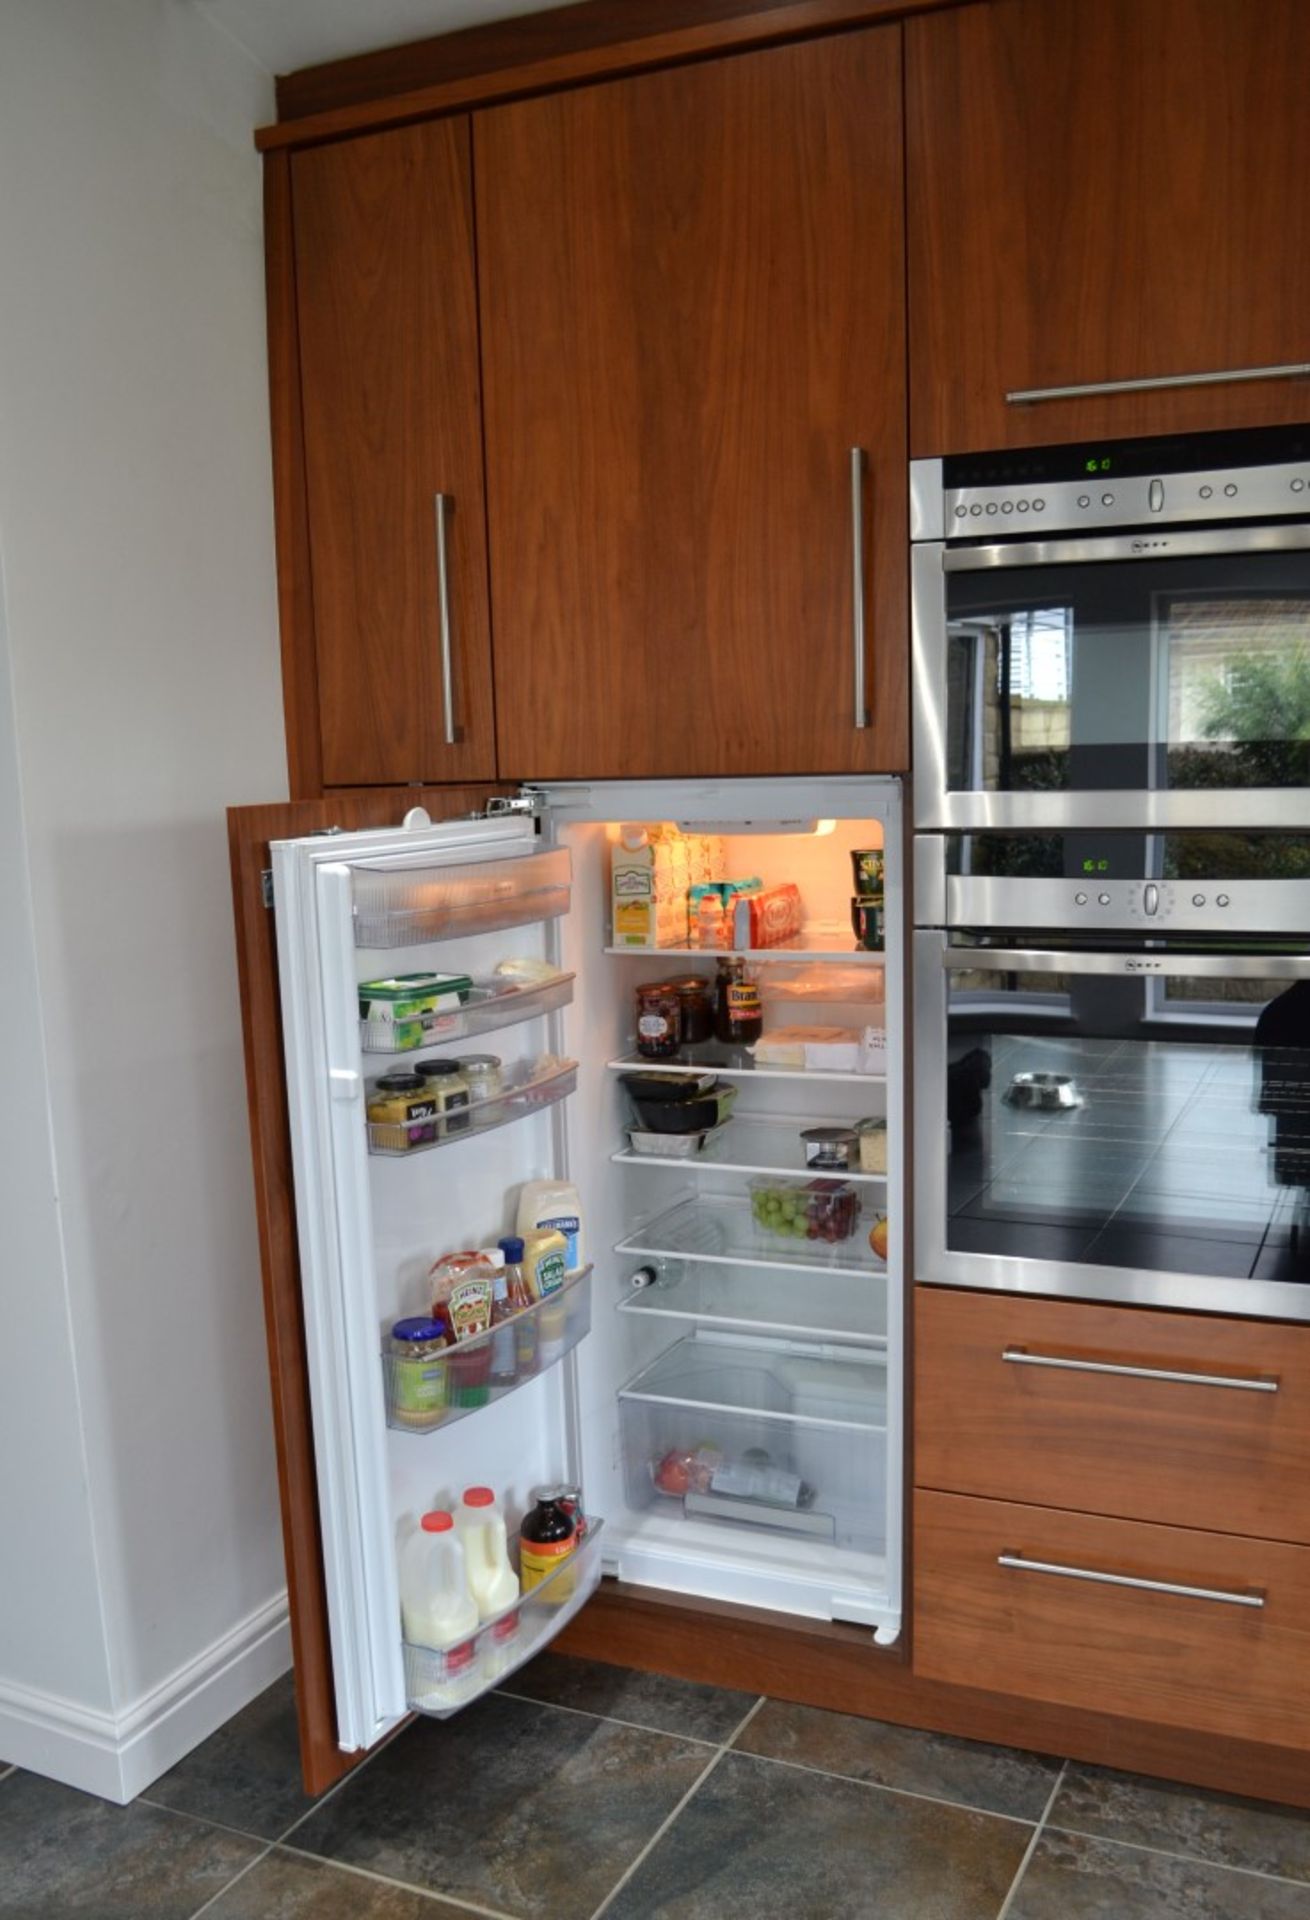 1 x Kitchen Design Bespoke Fitted Kitchen With Silestone Worktops & Neff Appliances - Superb - Image 50 of 59